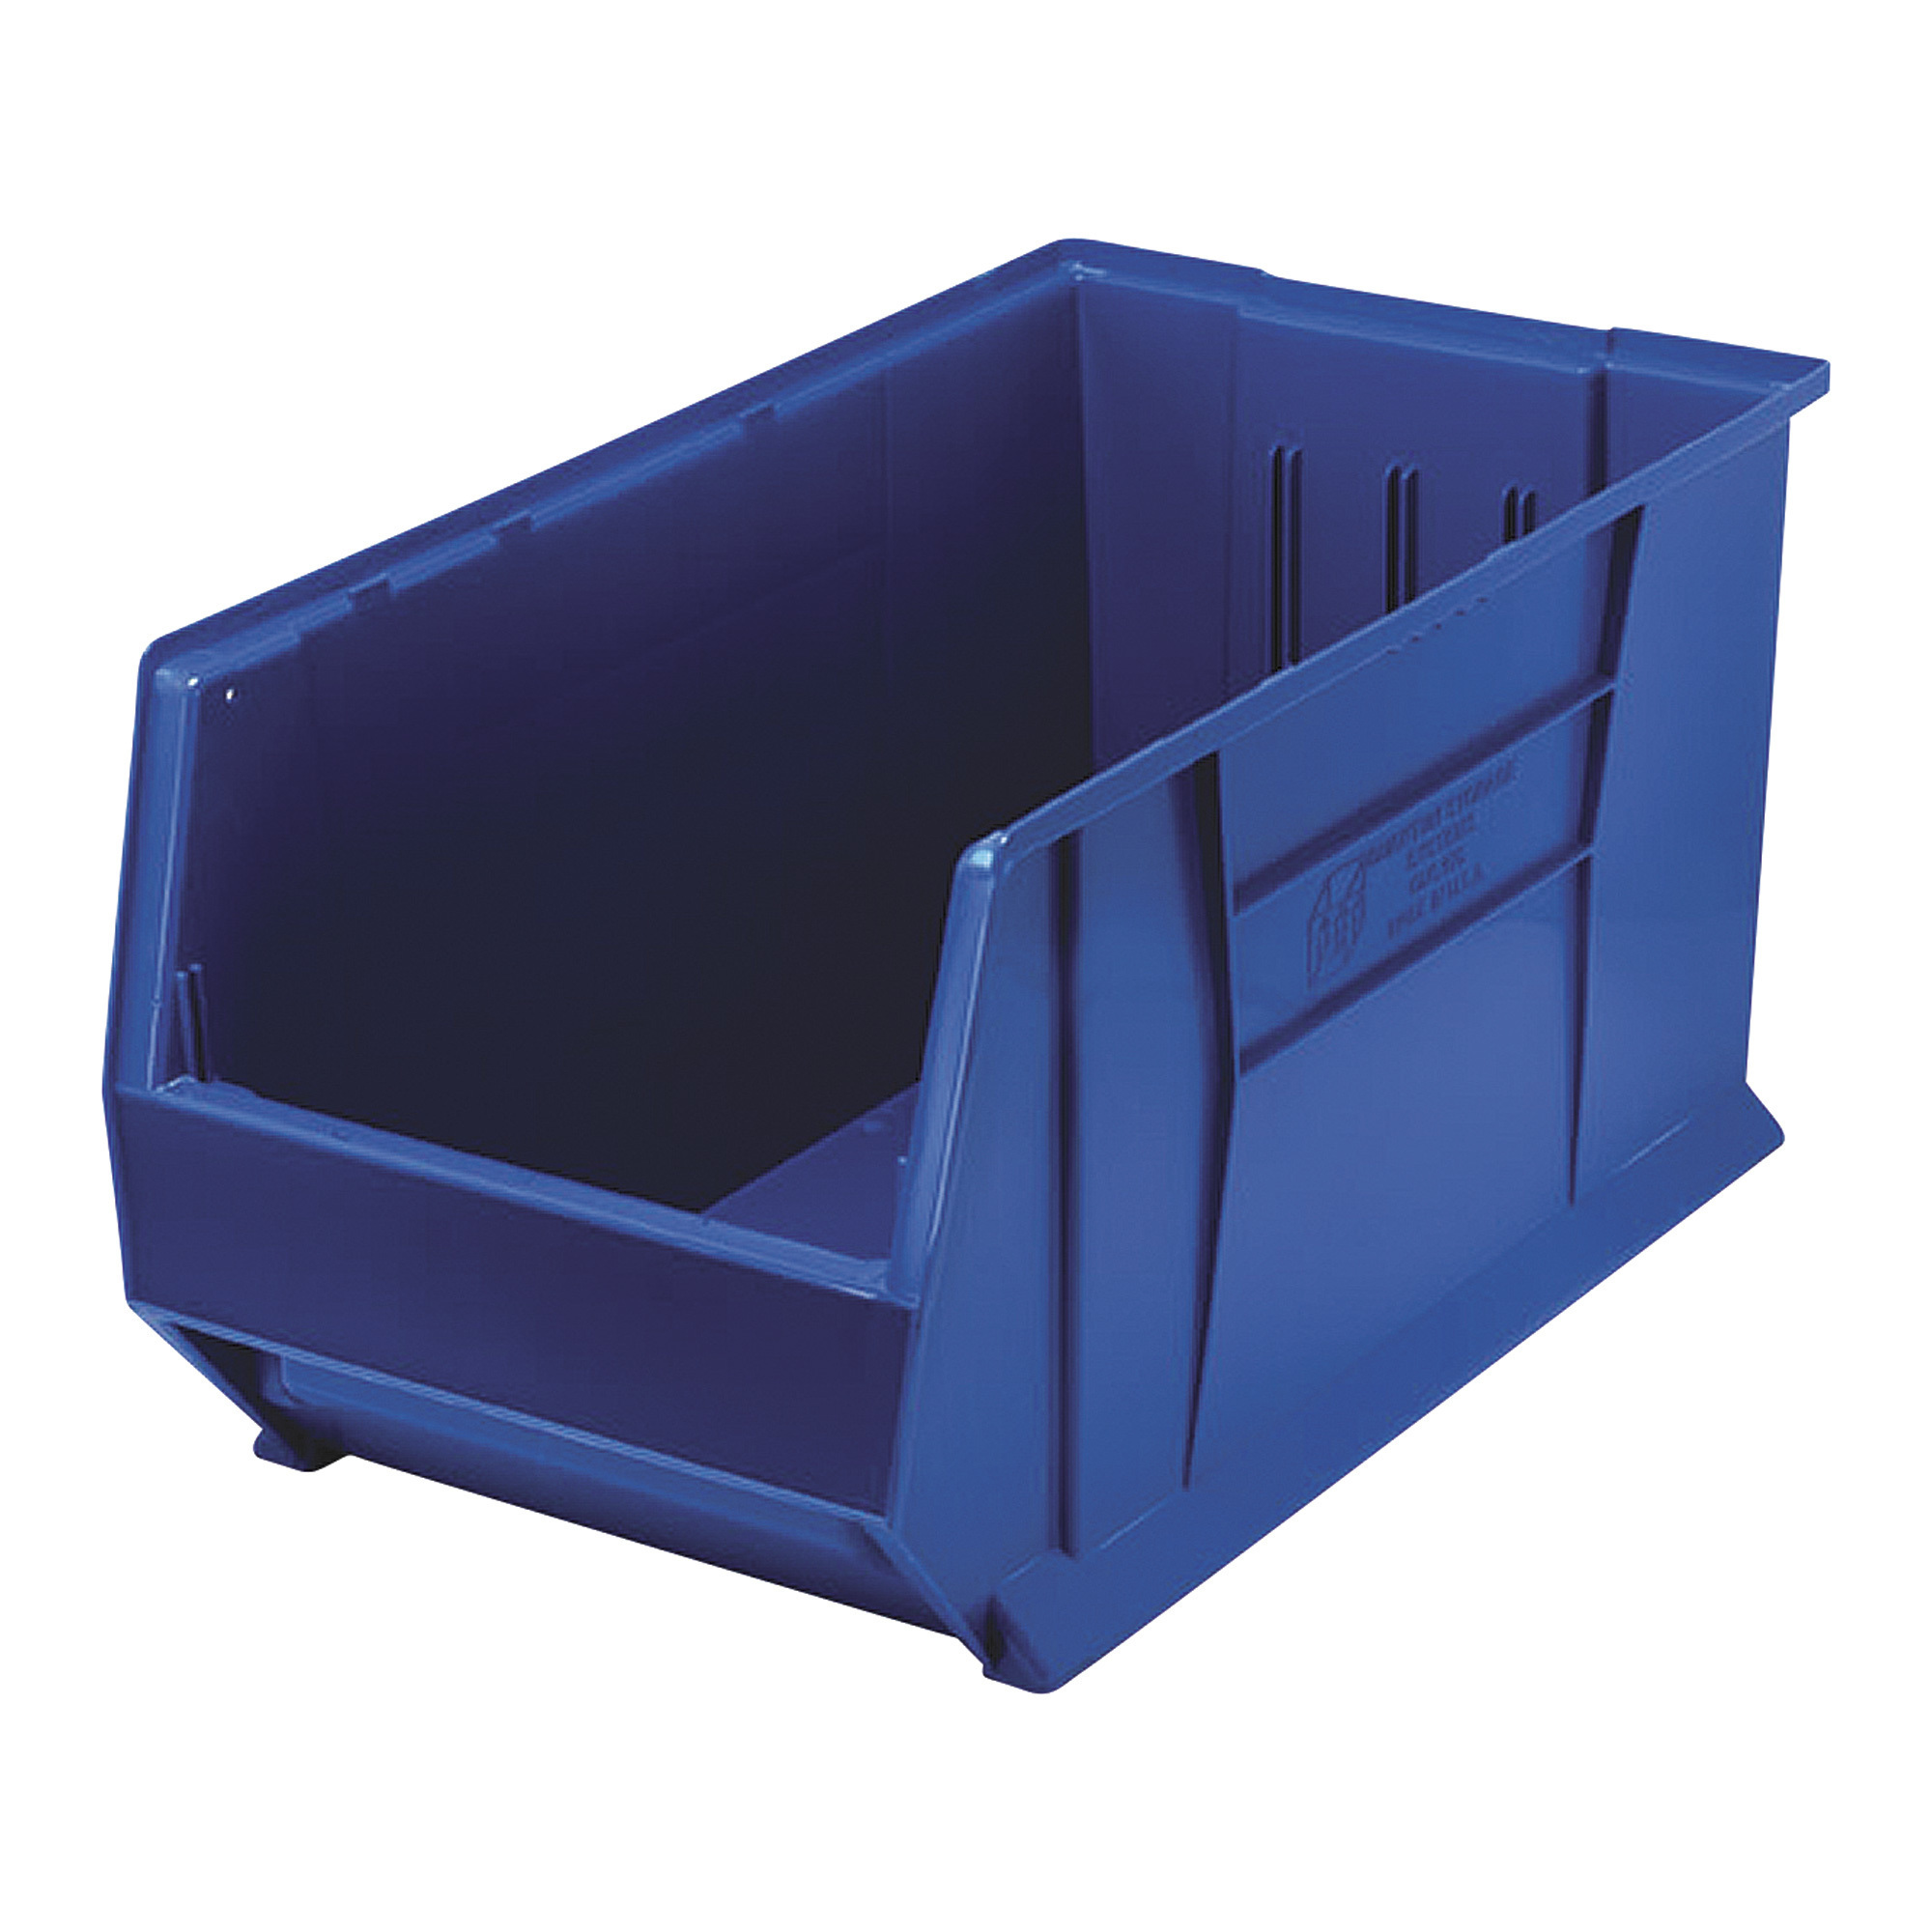 Quantum Storage 30Inch Hulk Container, 29 7/8Inch L x 16 1/2Inch W x 15Inch H, Blue, Model QUS976BL